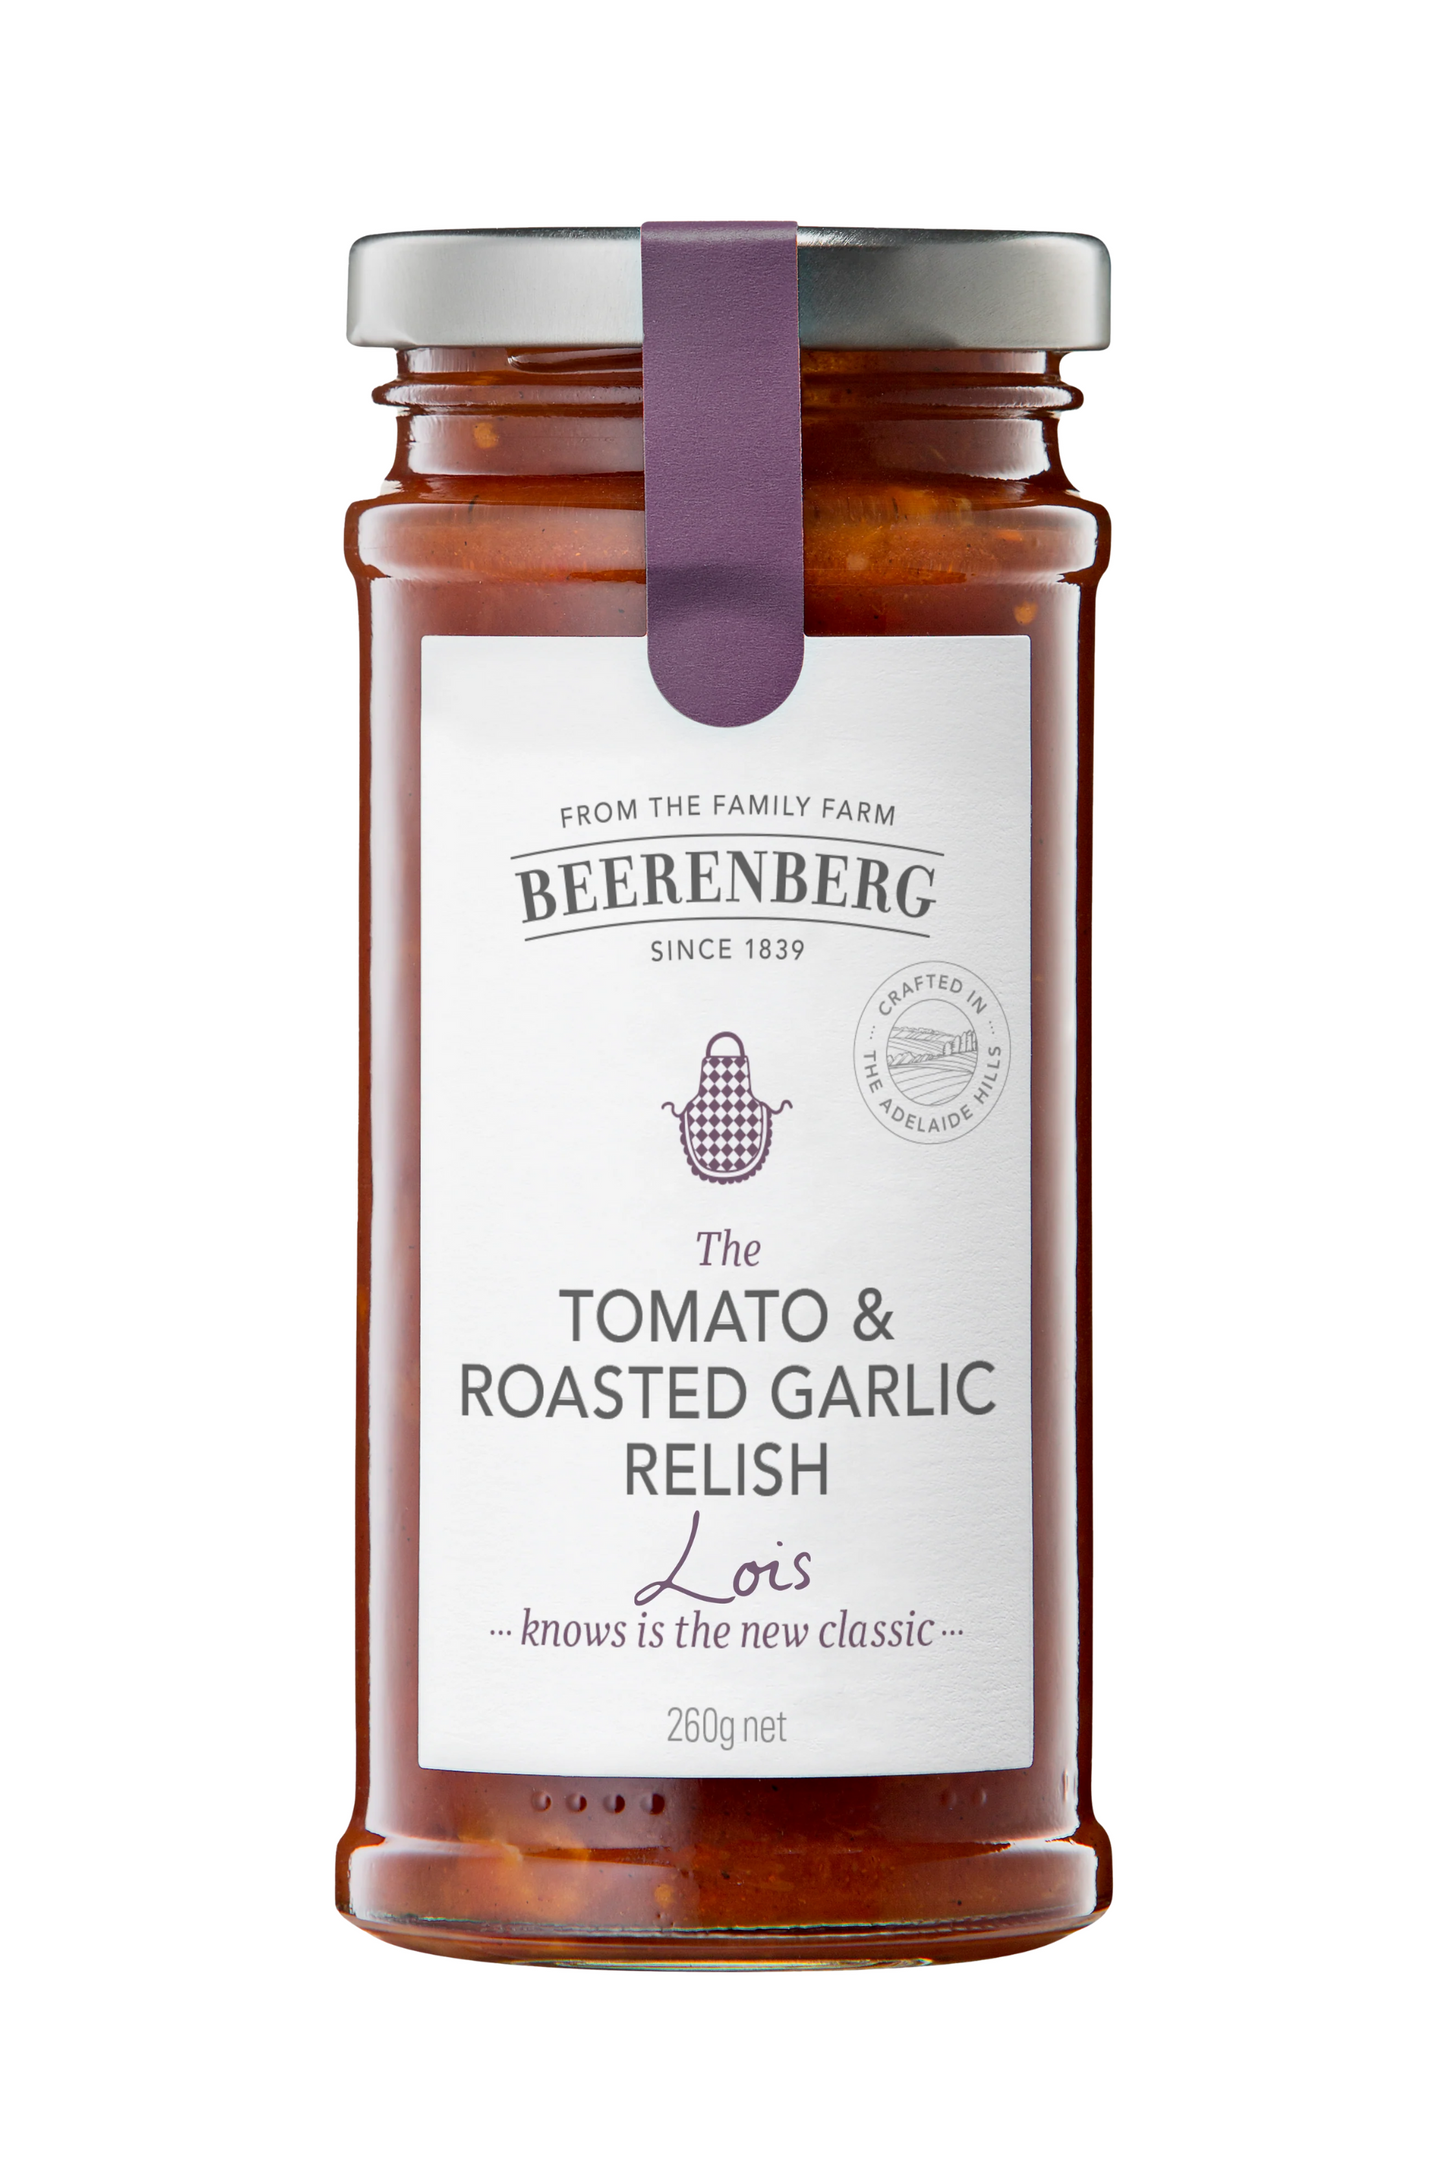 Beerenberg Tomato & Roasted Garlic Relish 260g